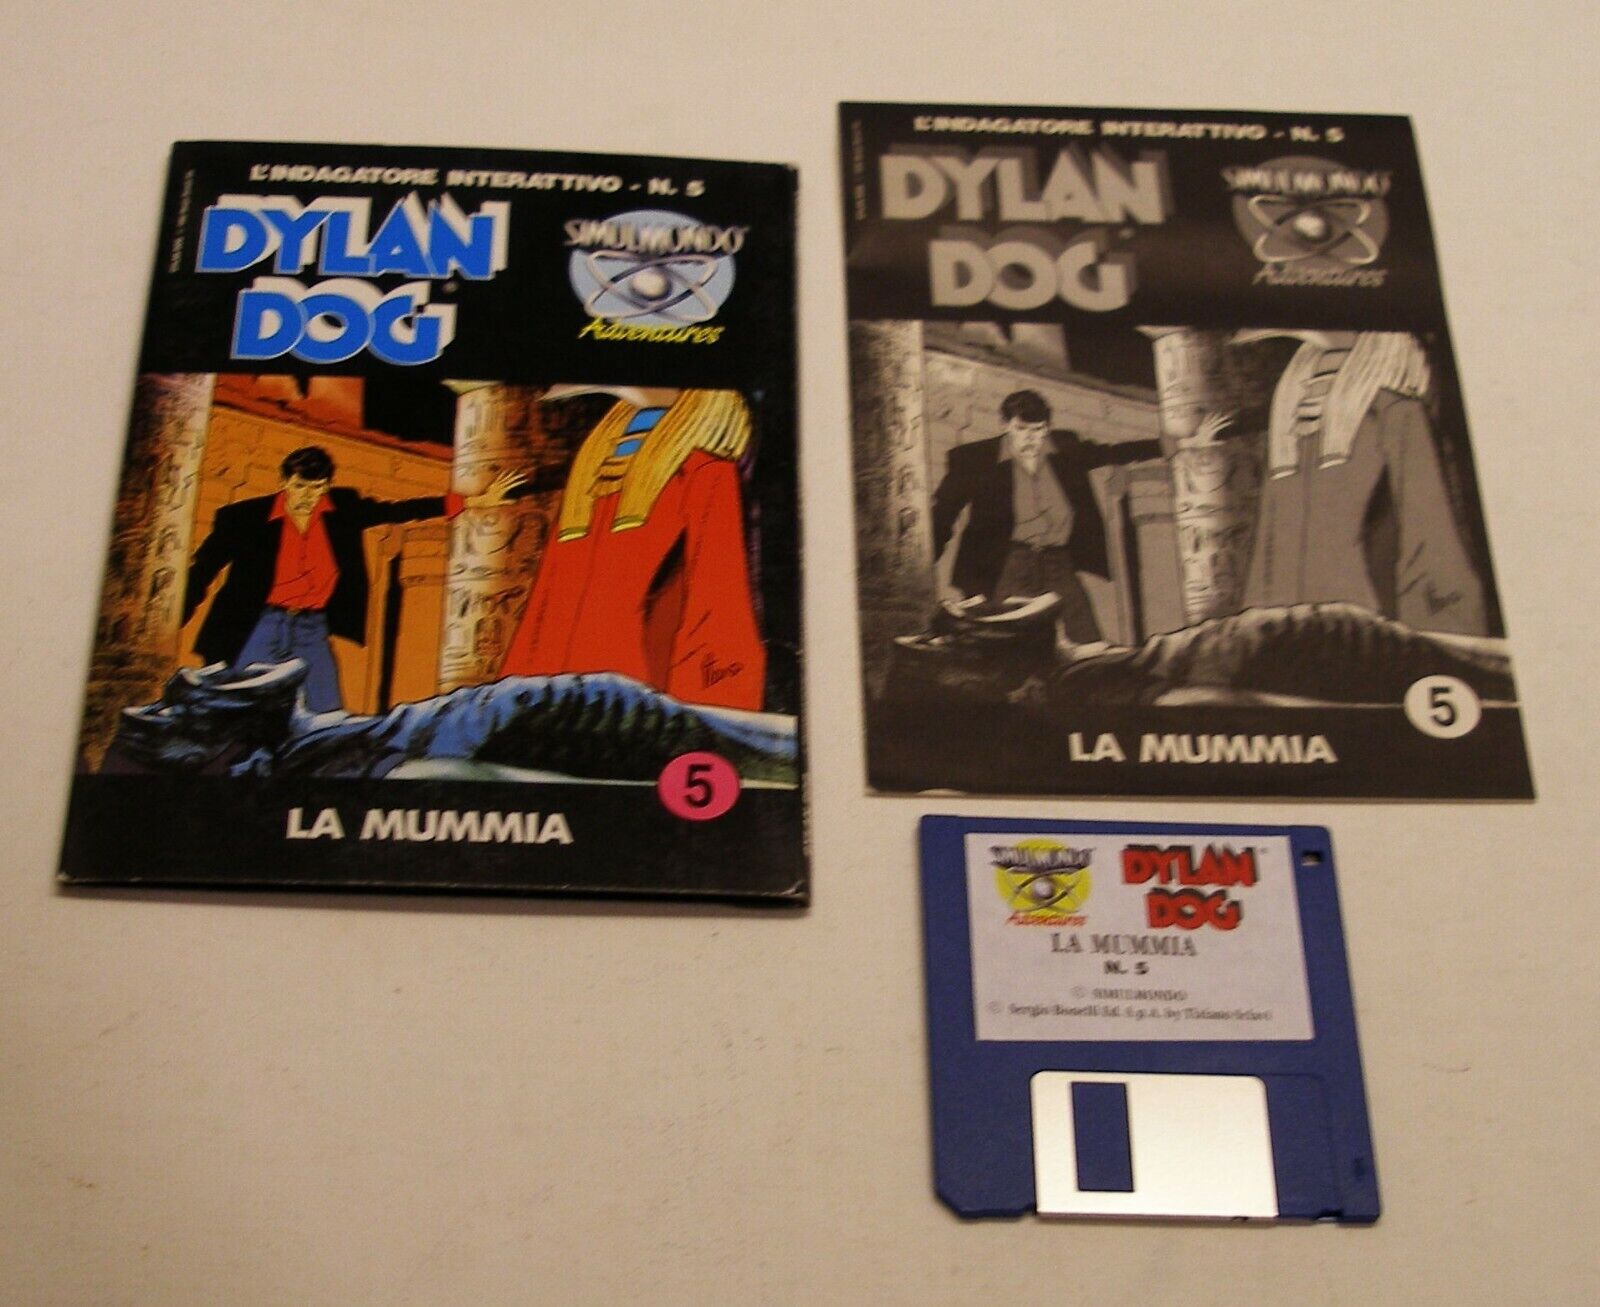 EXTREMELY RARE: Dylan Dog # 05: La Mummia by Simulmondo for Commodore Amiga